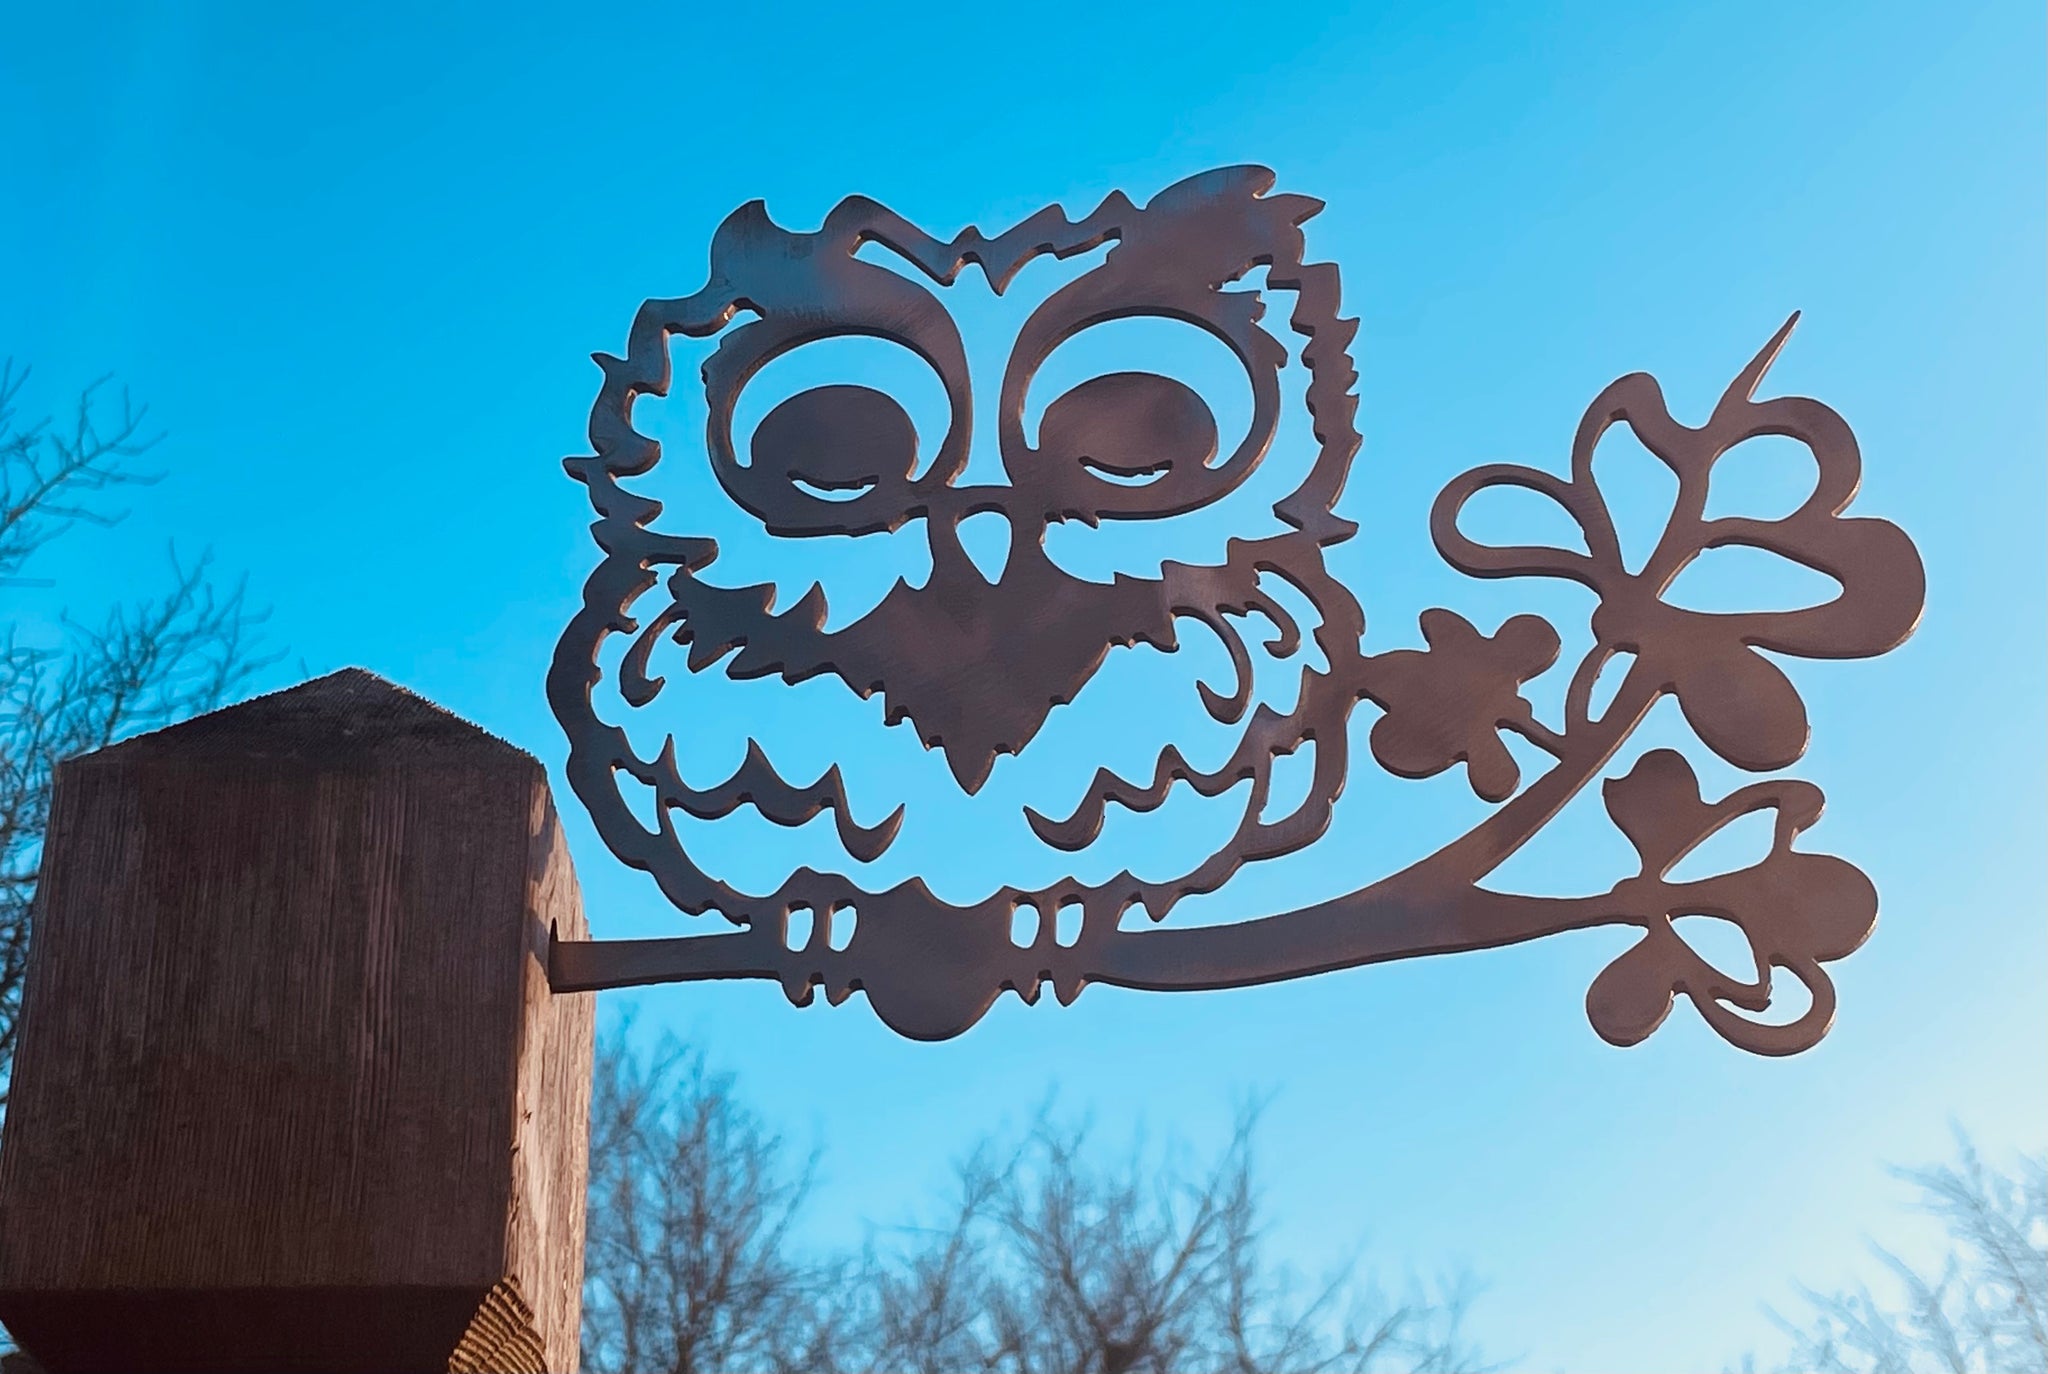 Handcrafted Metal Yard Art Owl Garden Stake